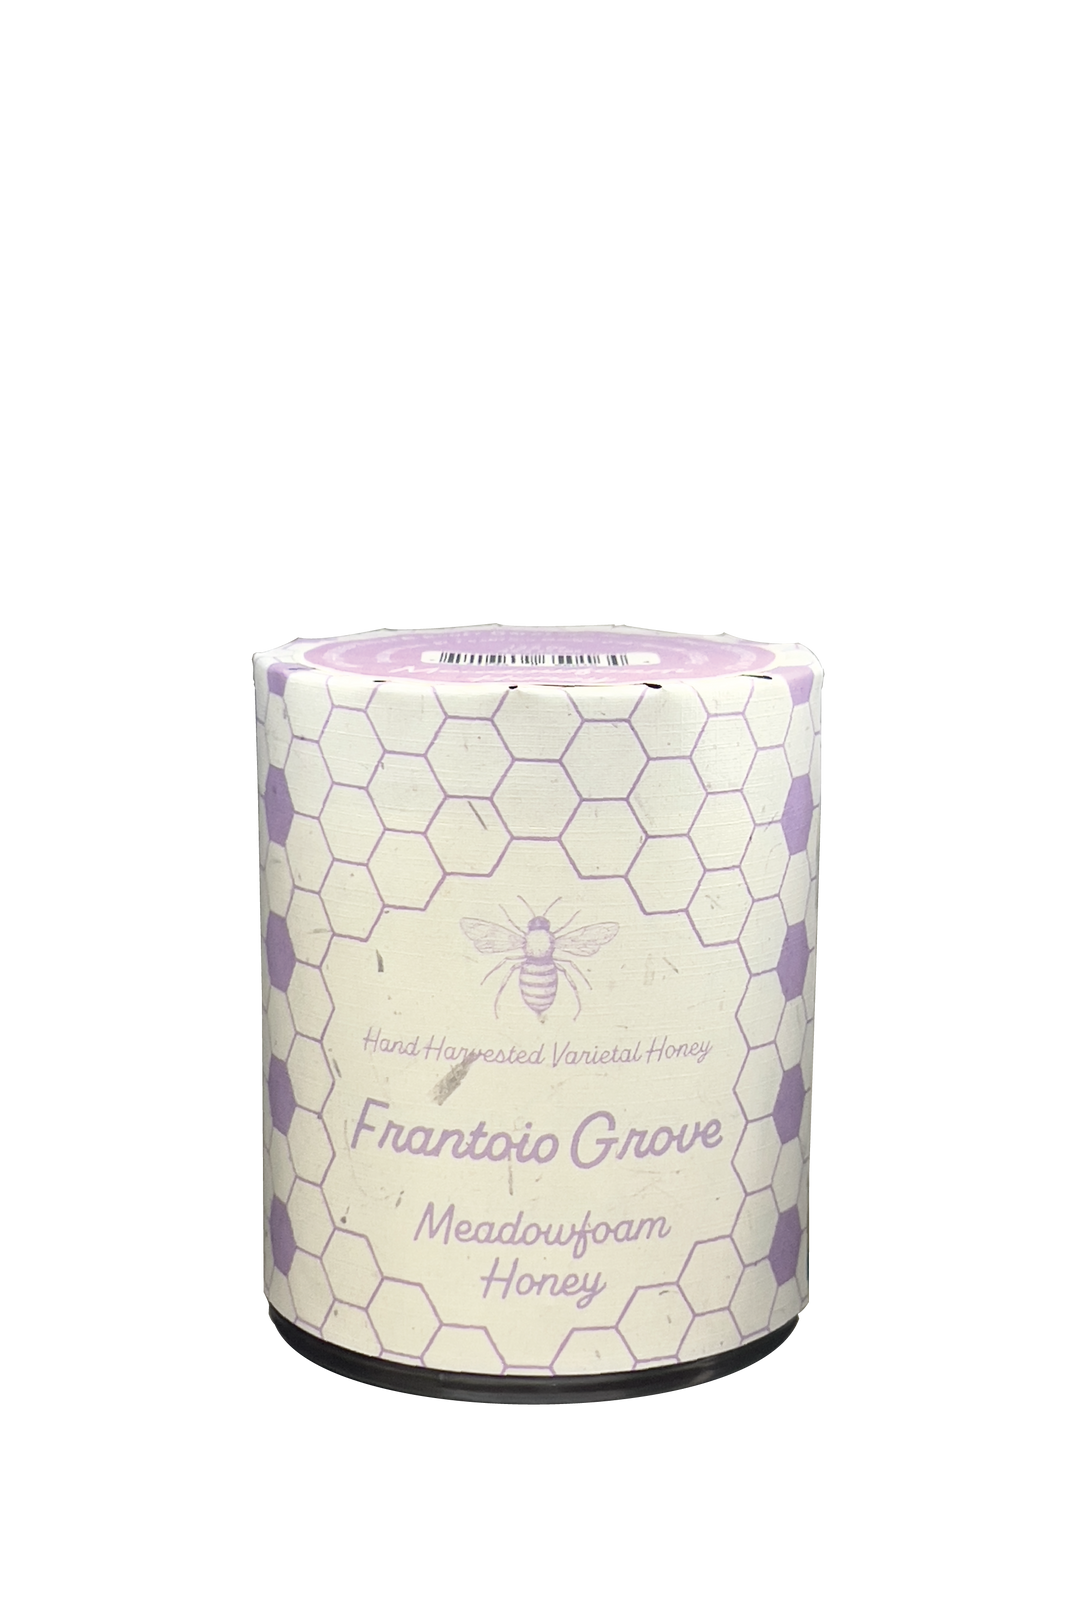 Frantoio Grove Northwestern Meadowfoam Honey